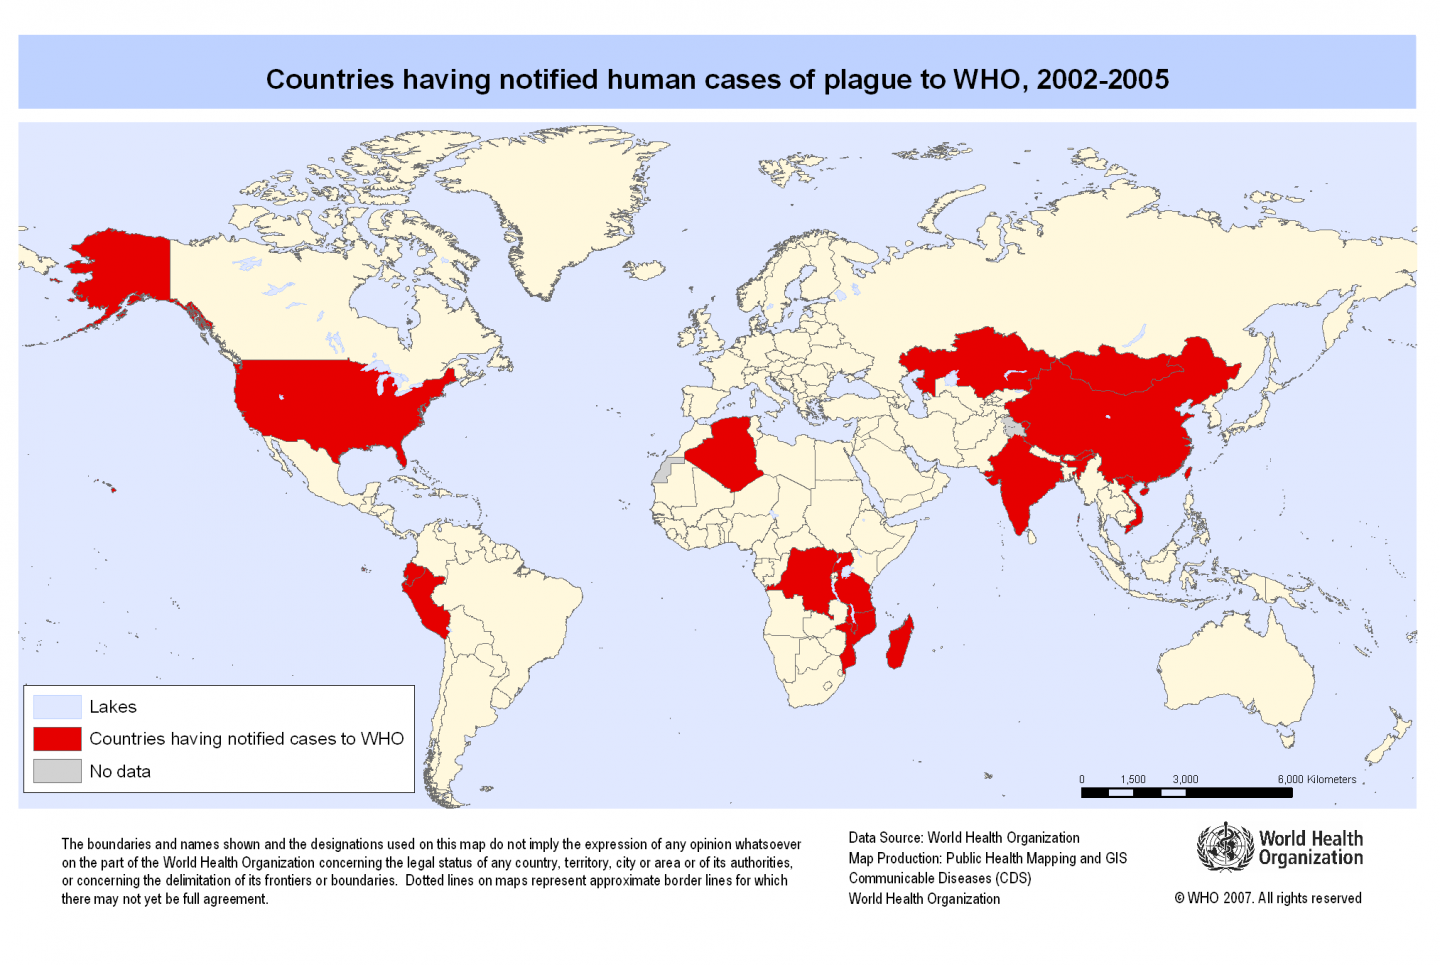 WHO statistics on plague